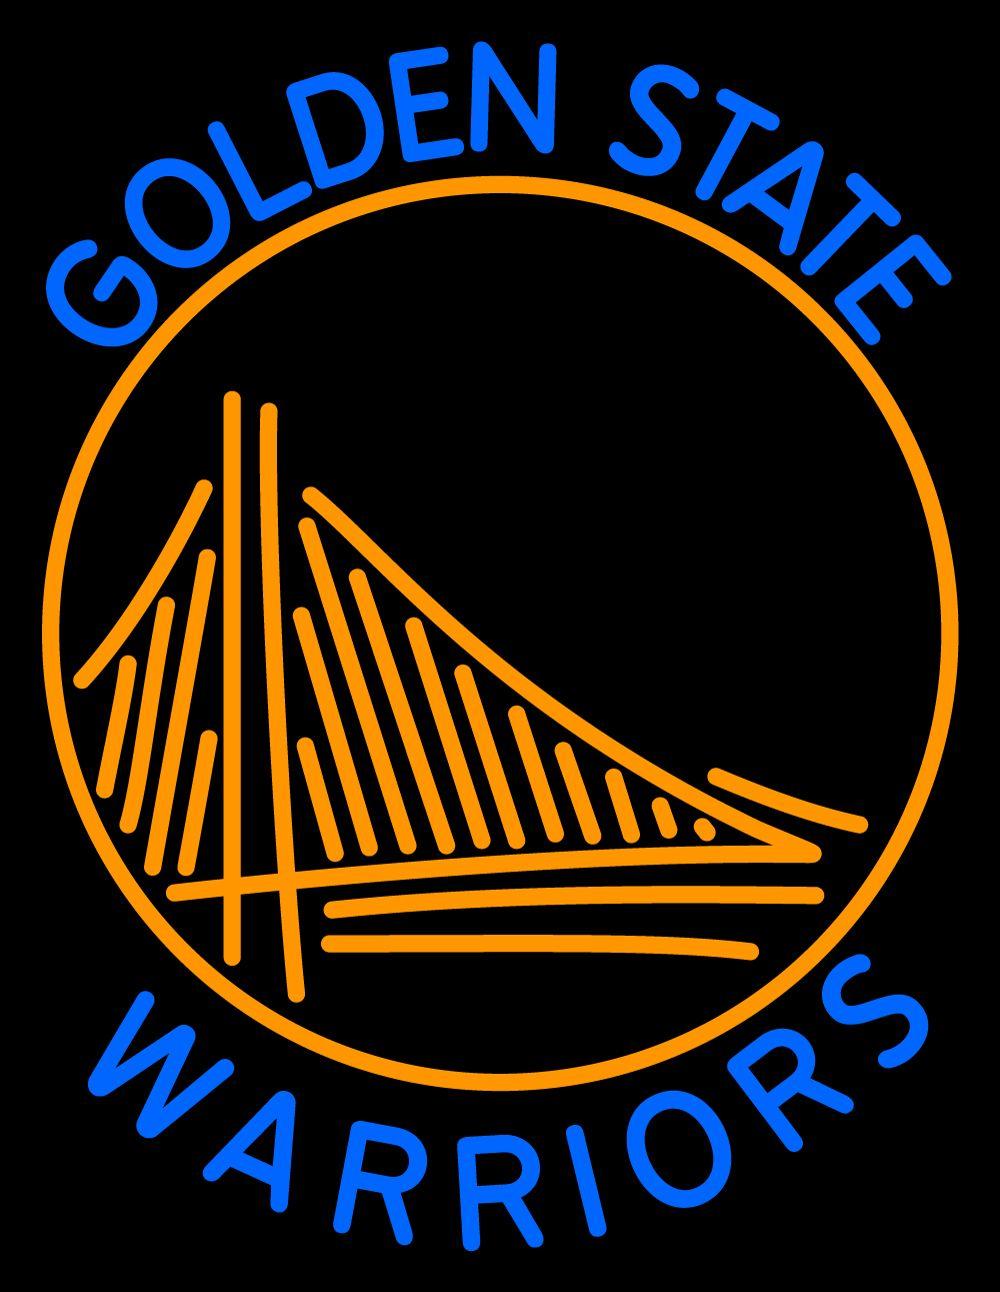 Golden State Warriors Logo Wallpapers - Wallpaper Cave